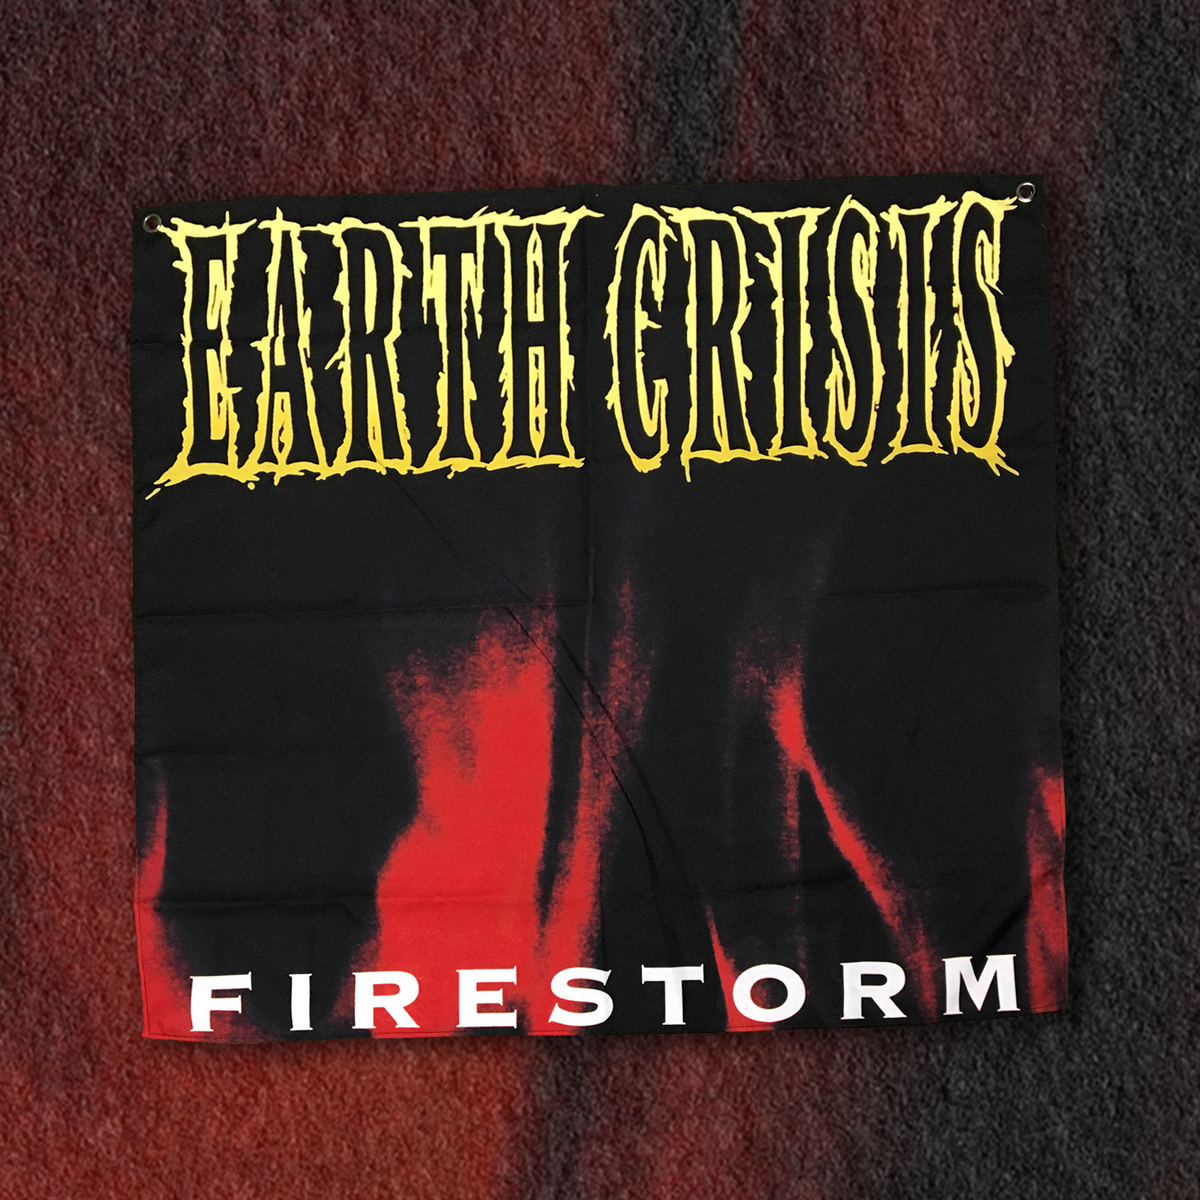 EARTH CRISIS "FIRESTORM" FLAG